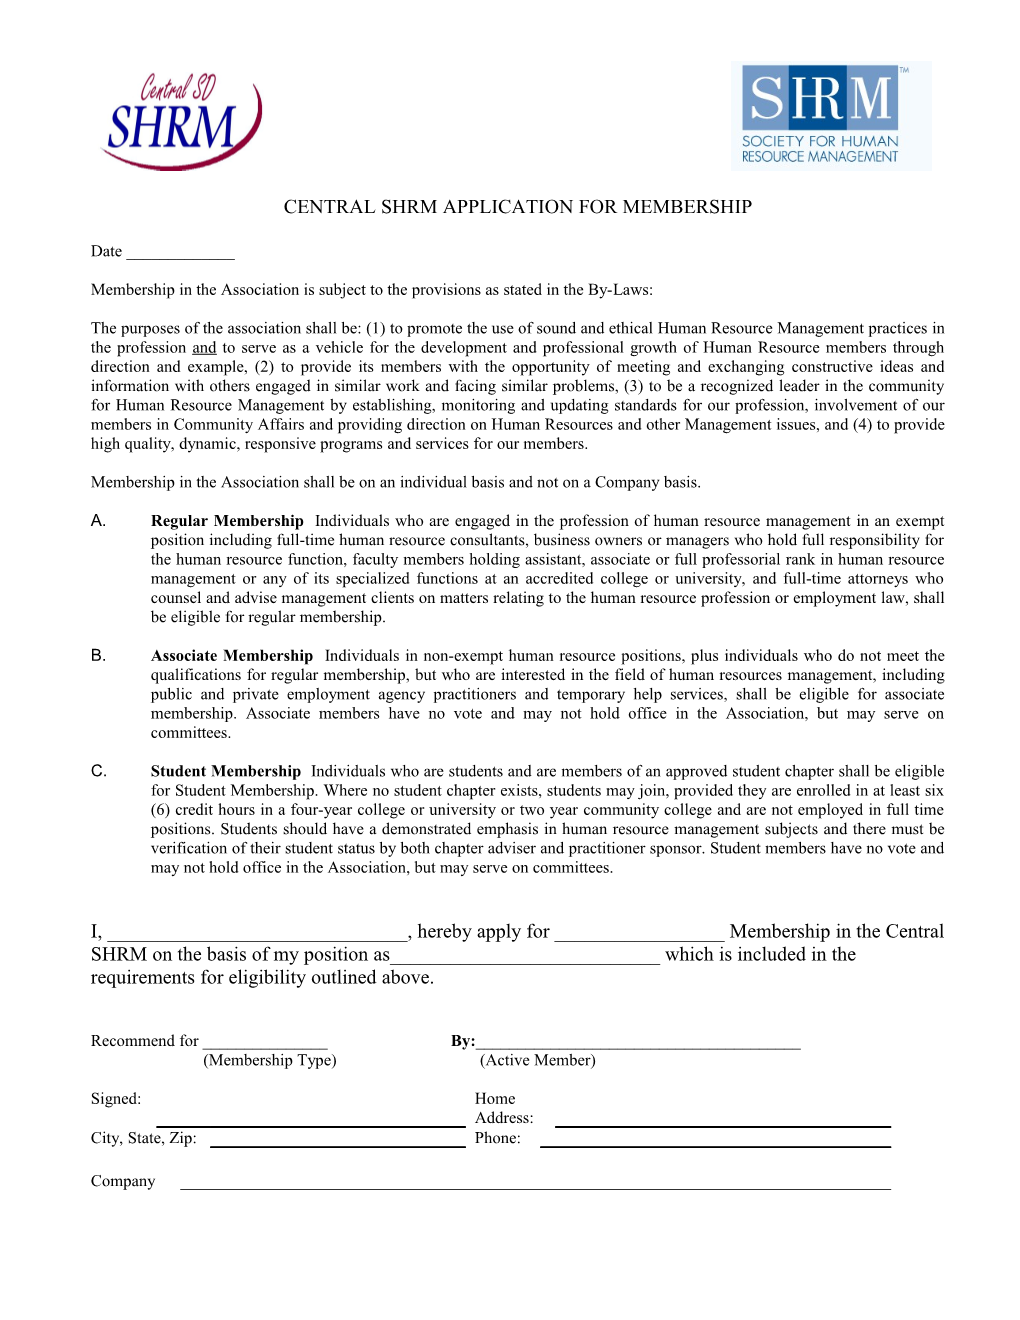 Central Shrm Application for Membership